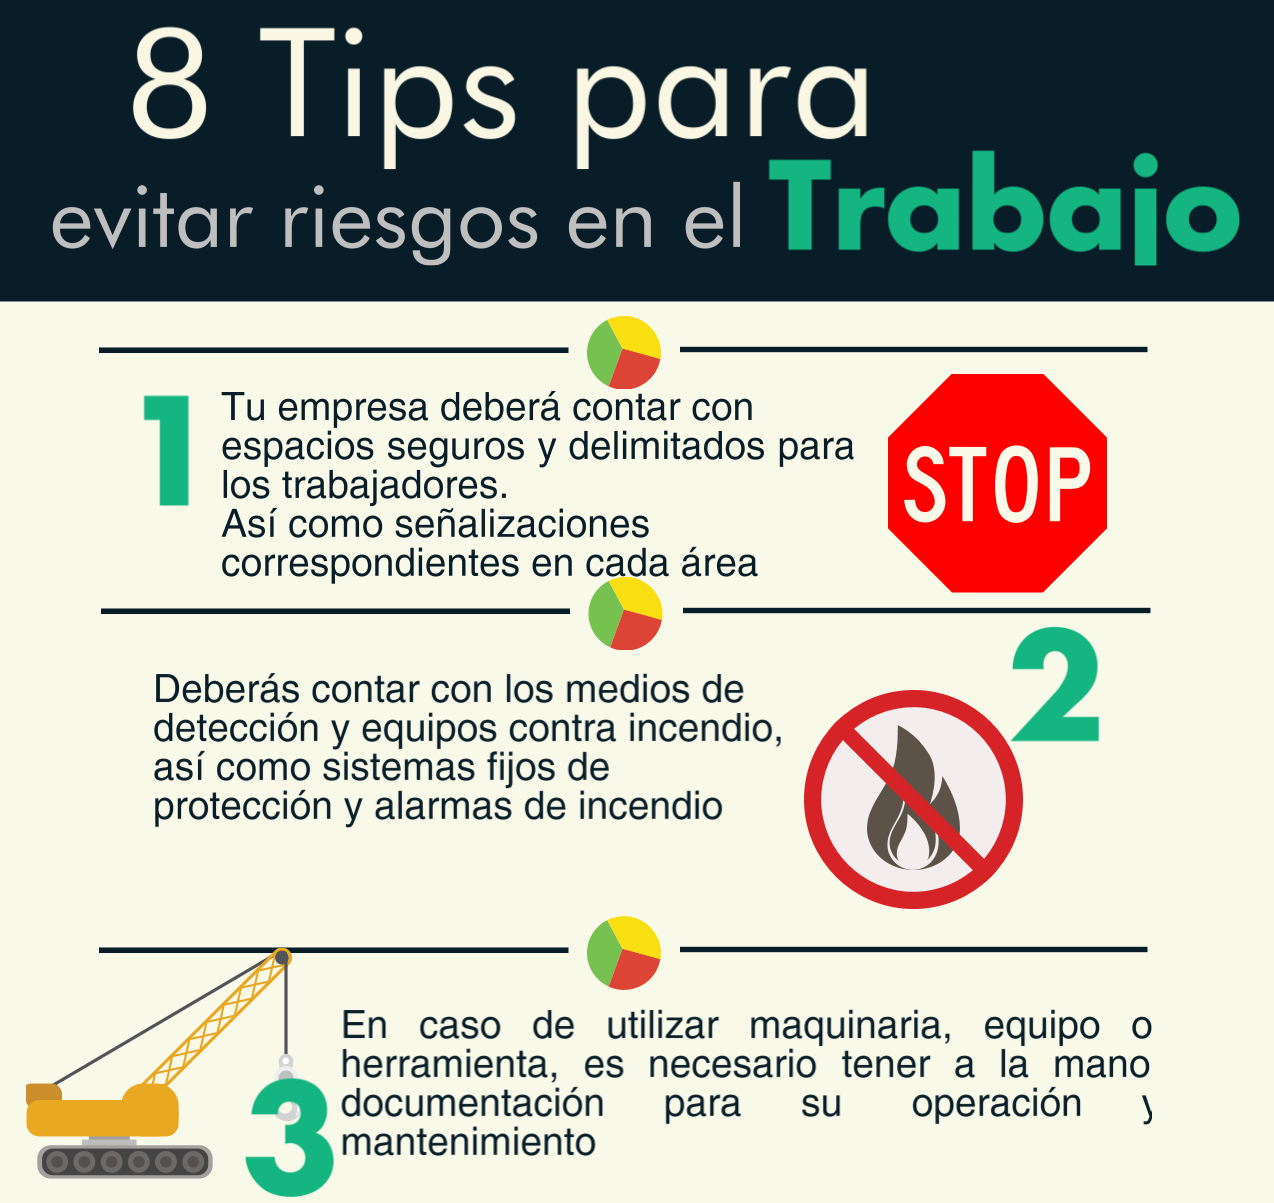 8 Tips para evitar